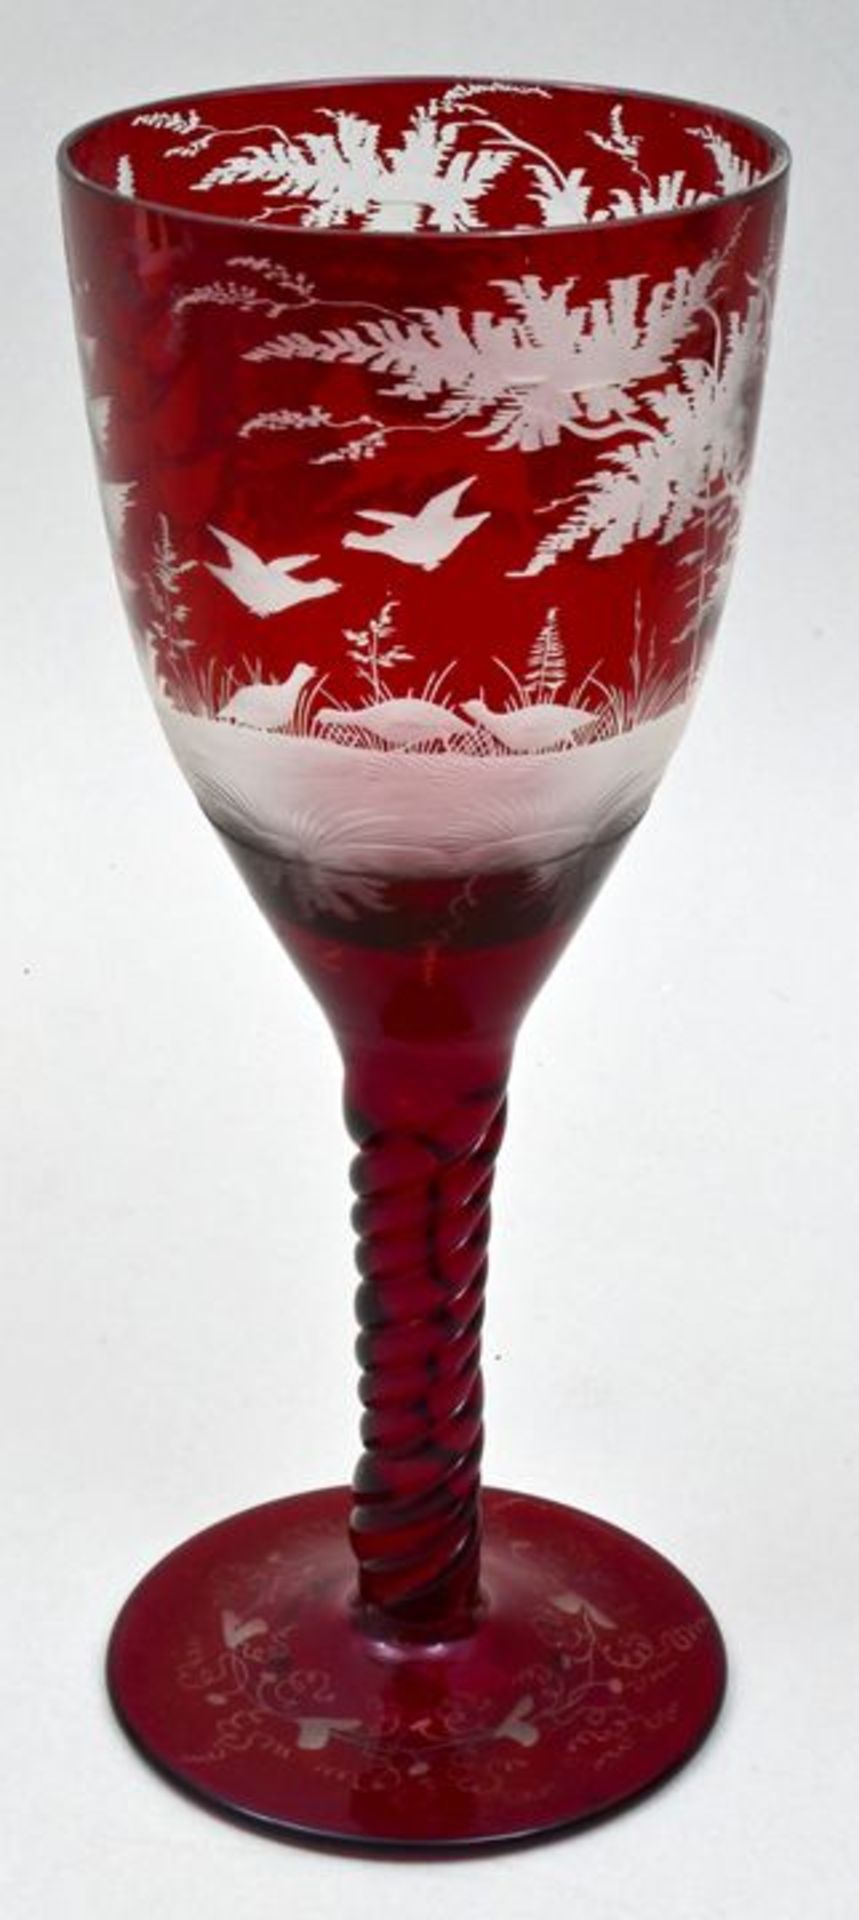 Pokalglas / Glass goblet - Bild 4 aus 5